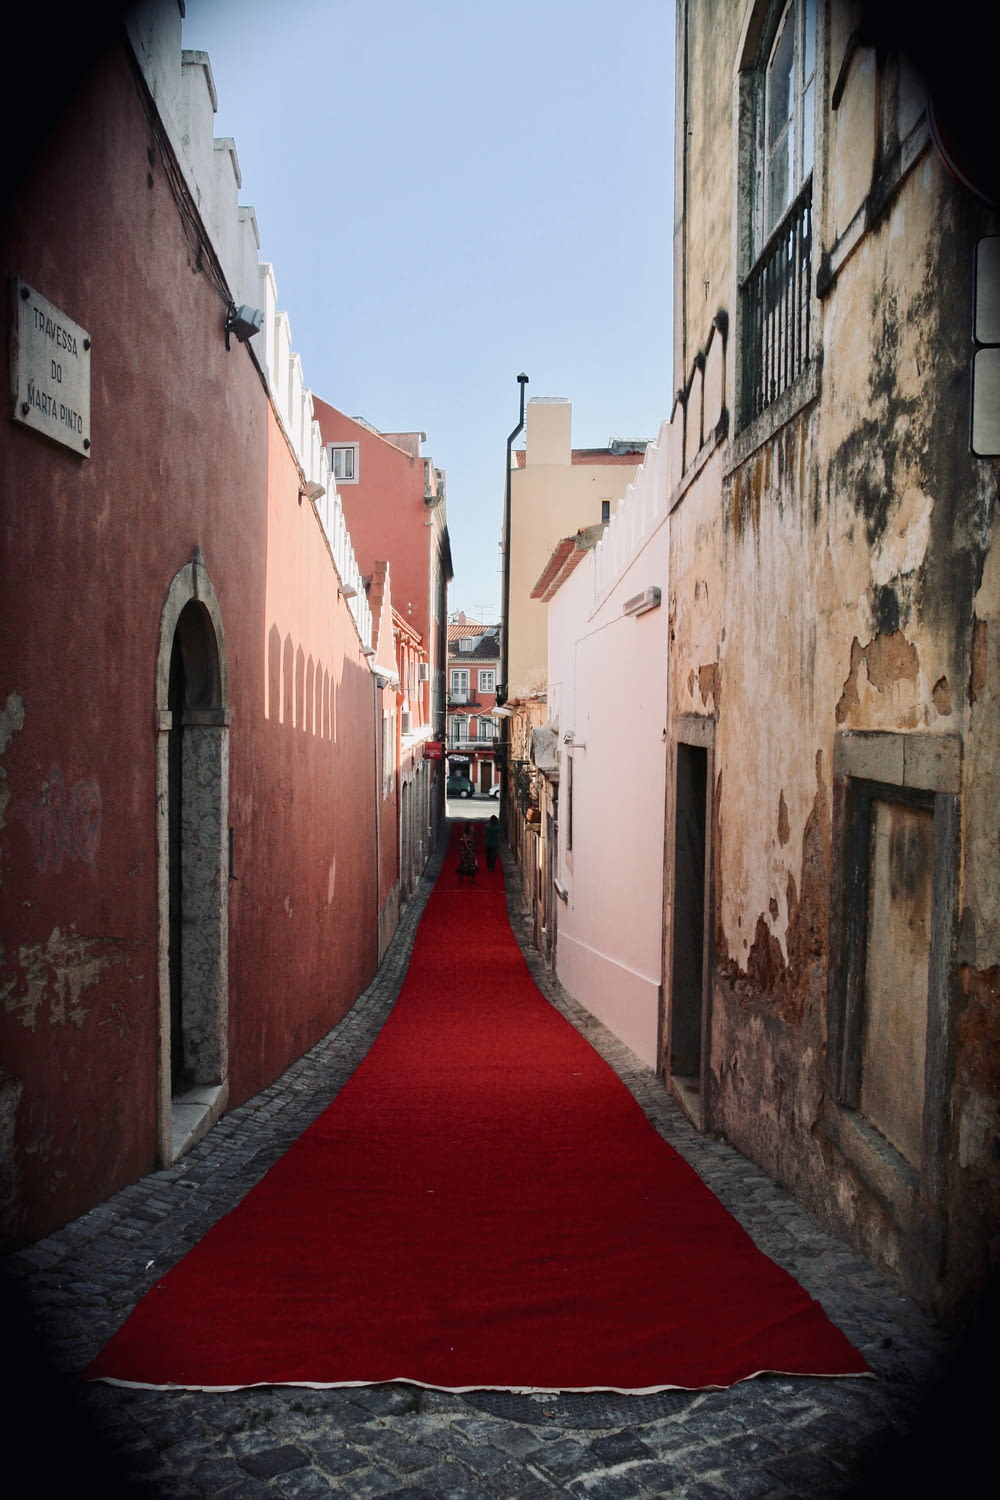 red hallway between brown concrete buildings during daytime